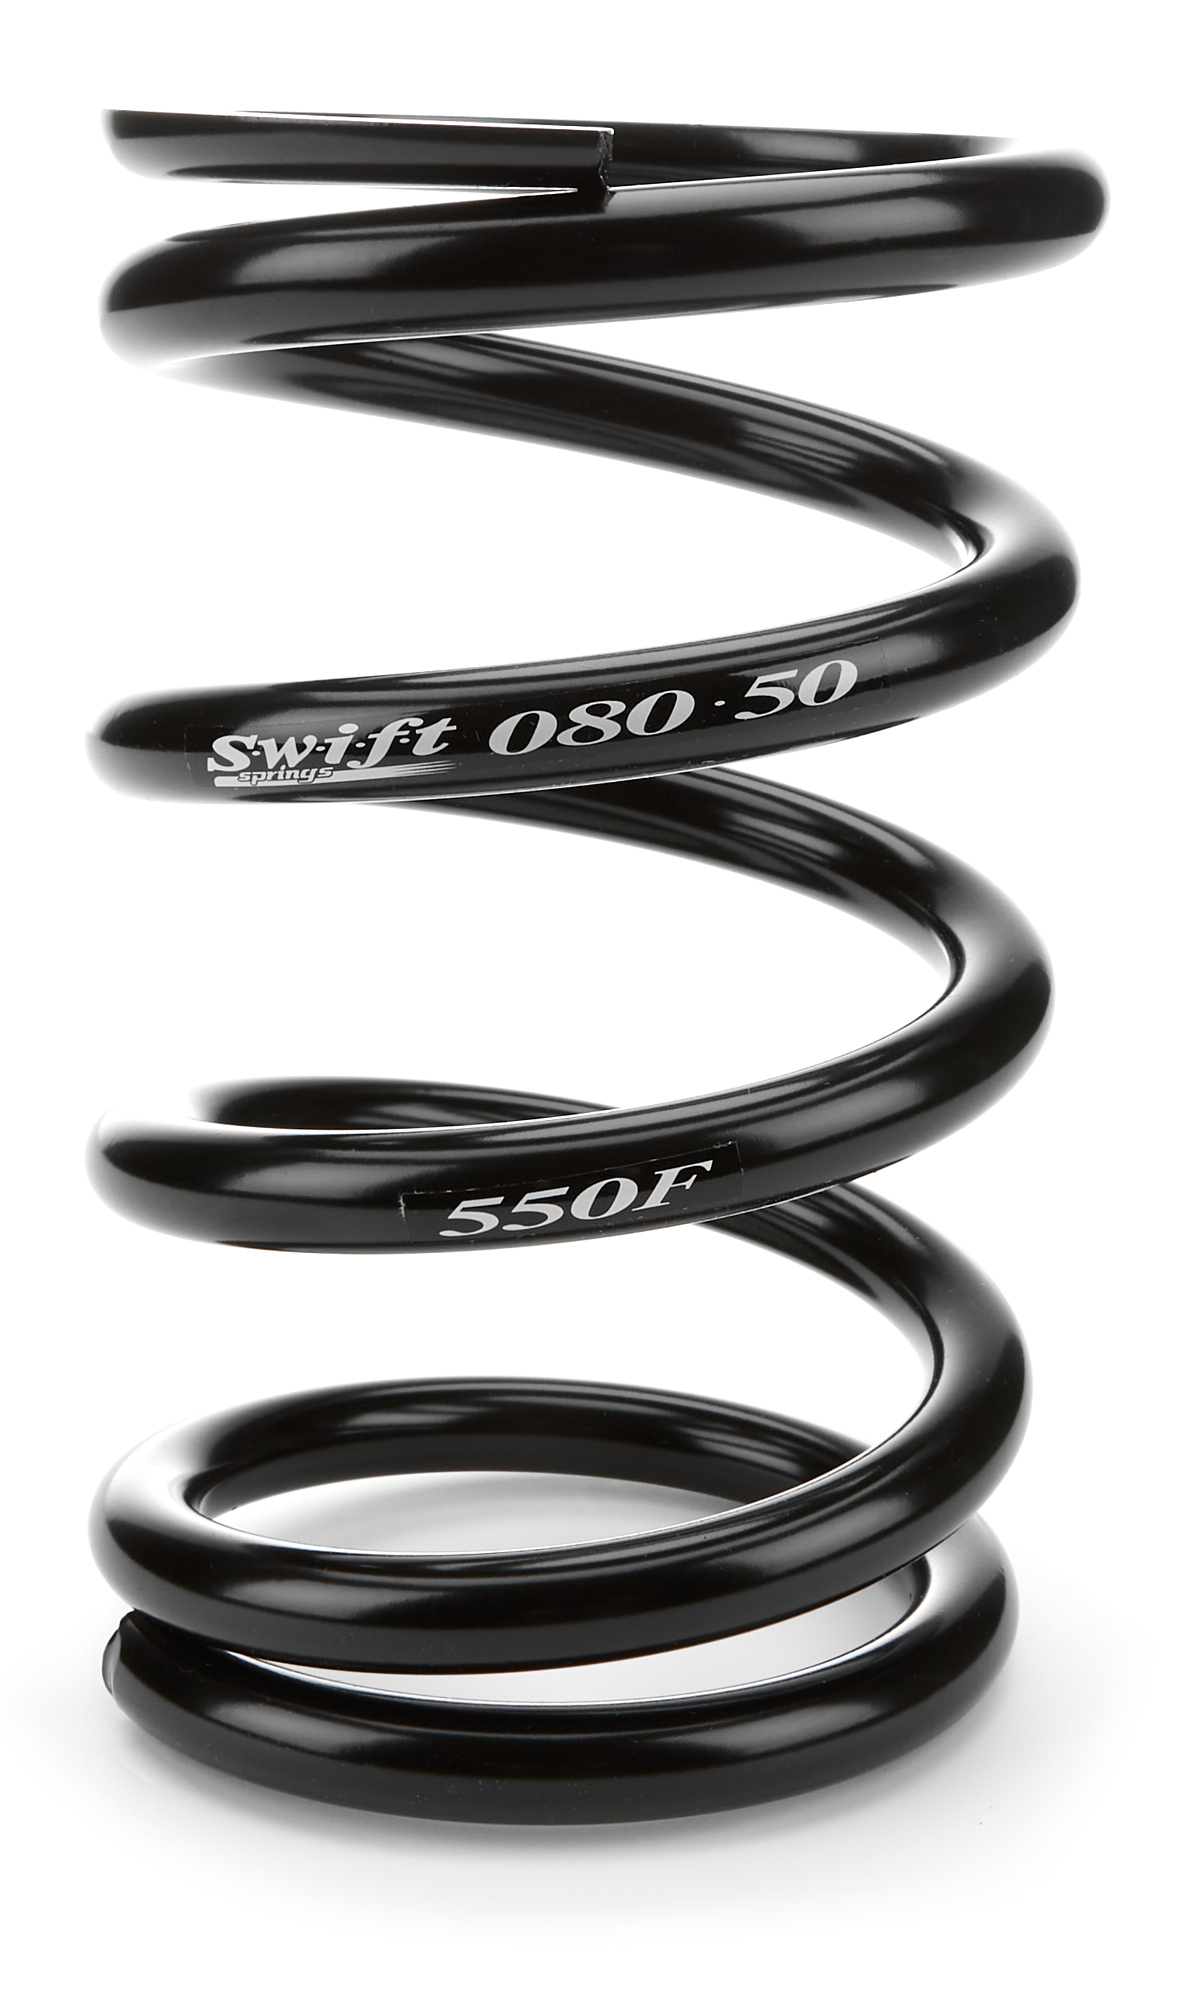 SWI-080-500-550F #1